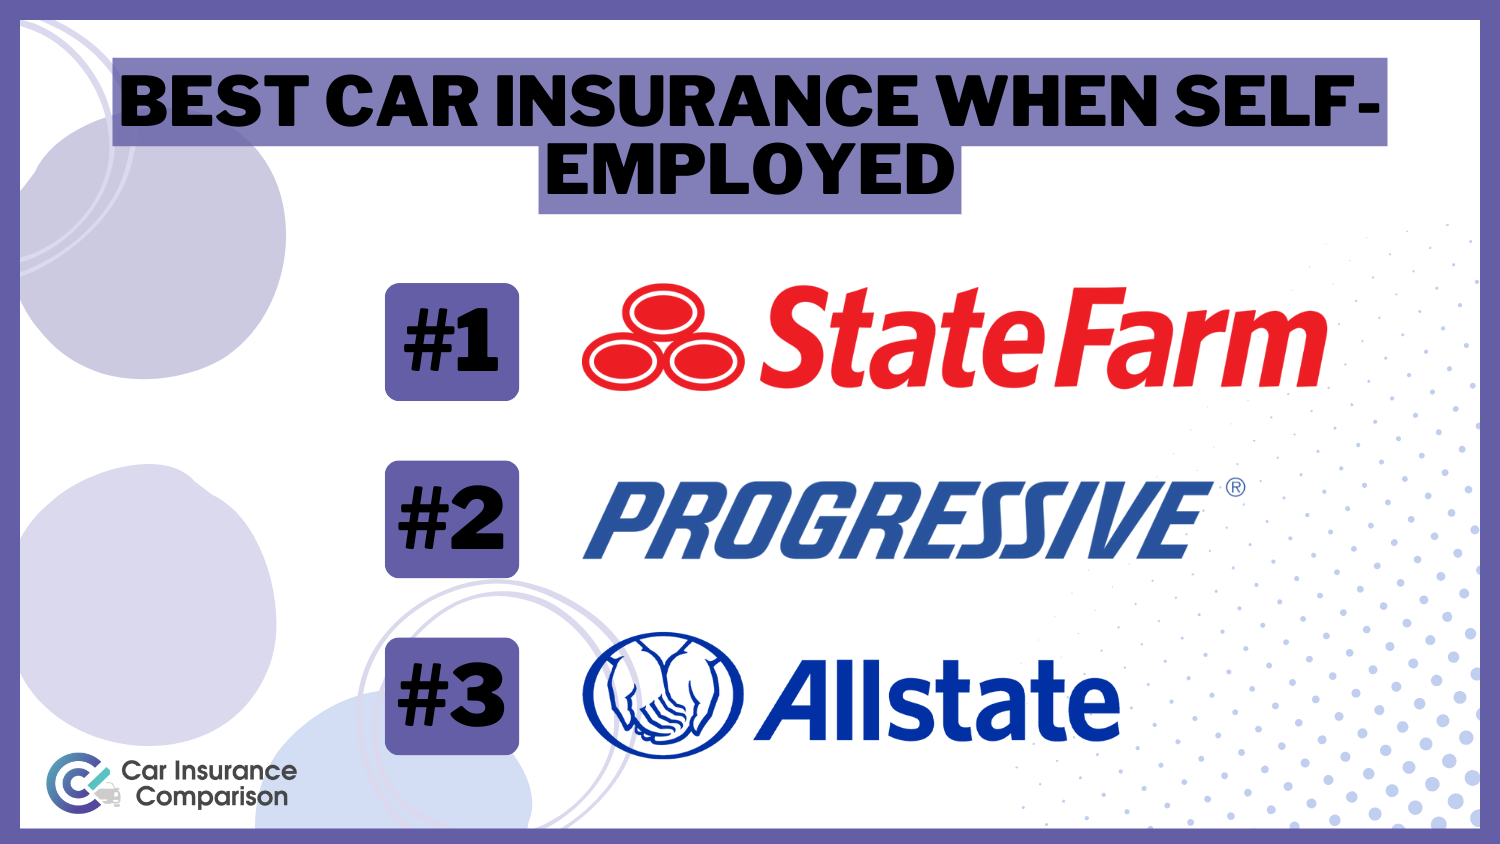 State Farm, Progressive, Allstate: Best Car Insurance When Self-Employed